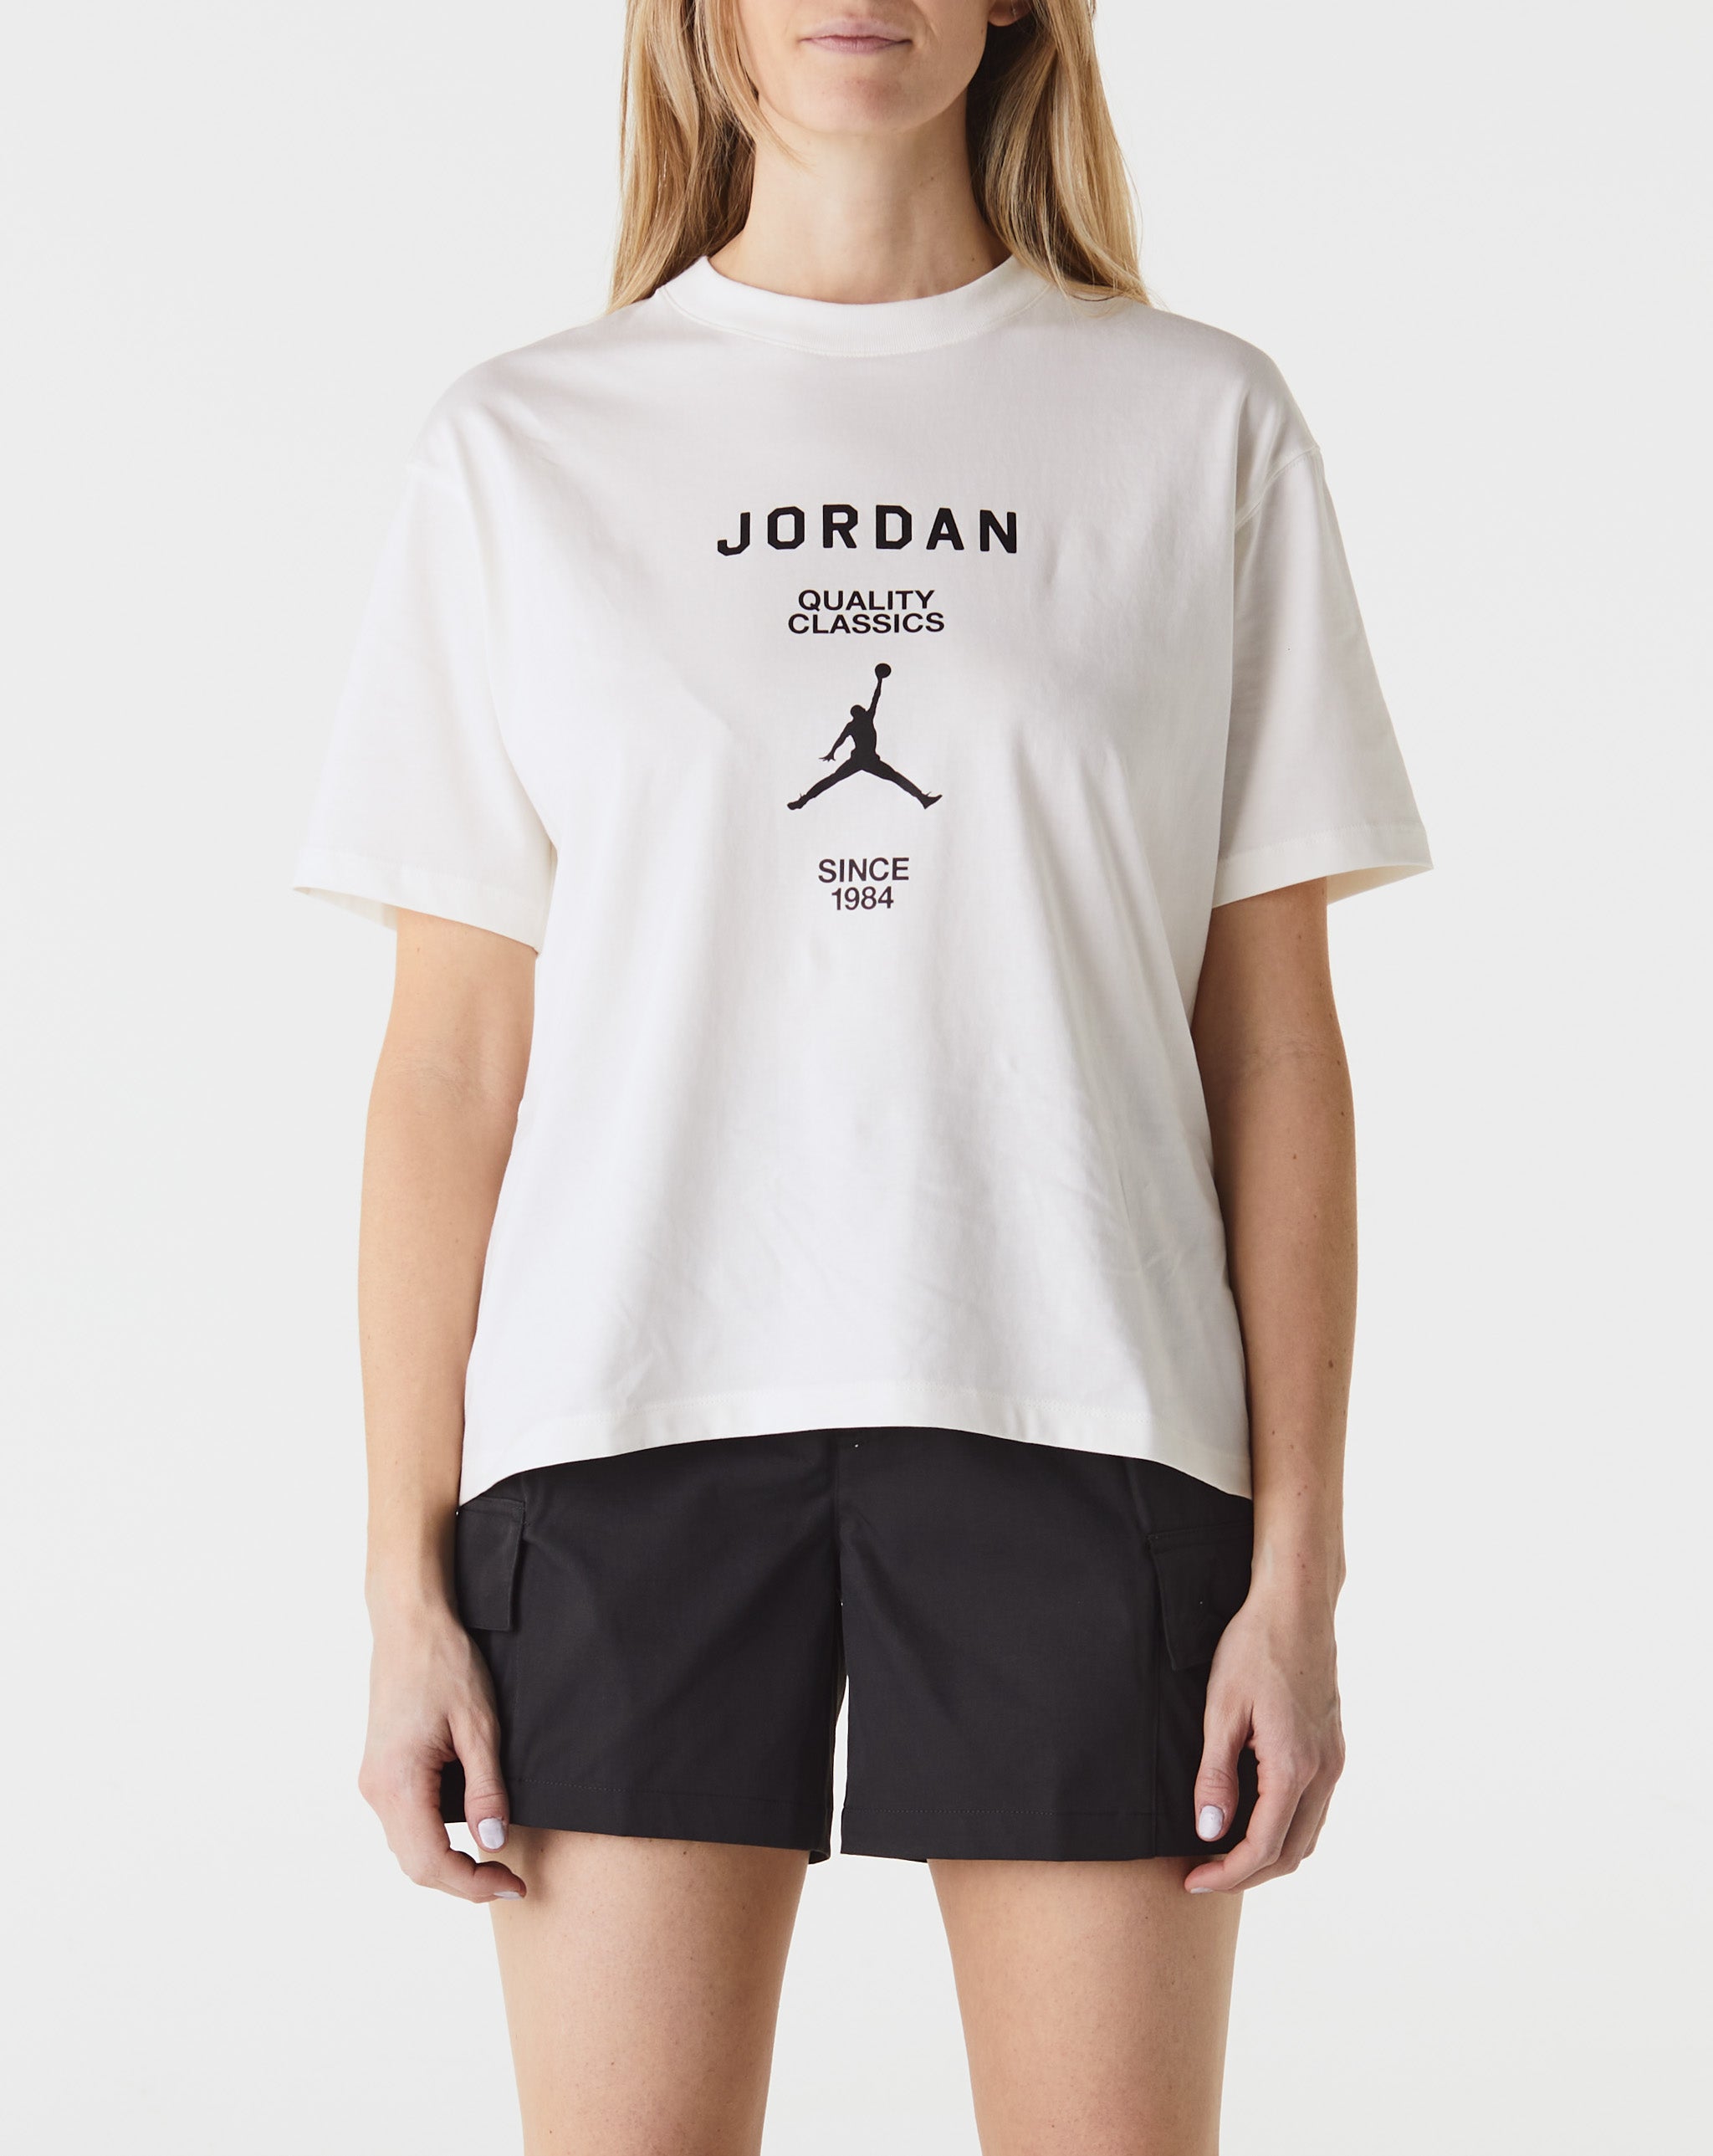 Air Jordan Women's Jordan Quality Classics T-Shirt  - Cheap 127-0 Jordan outlet